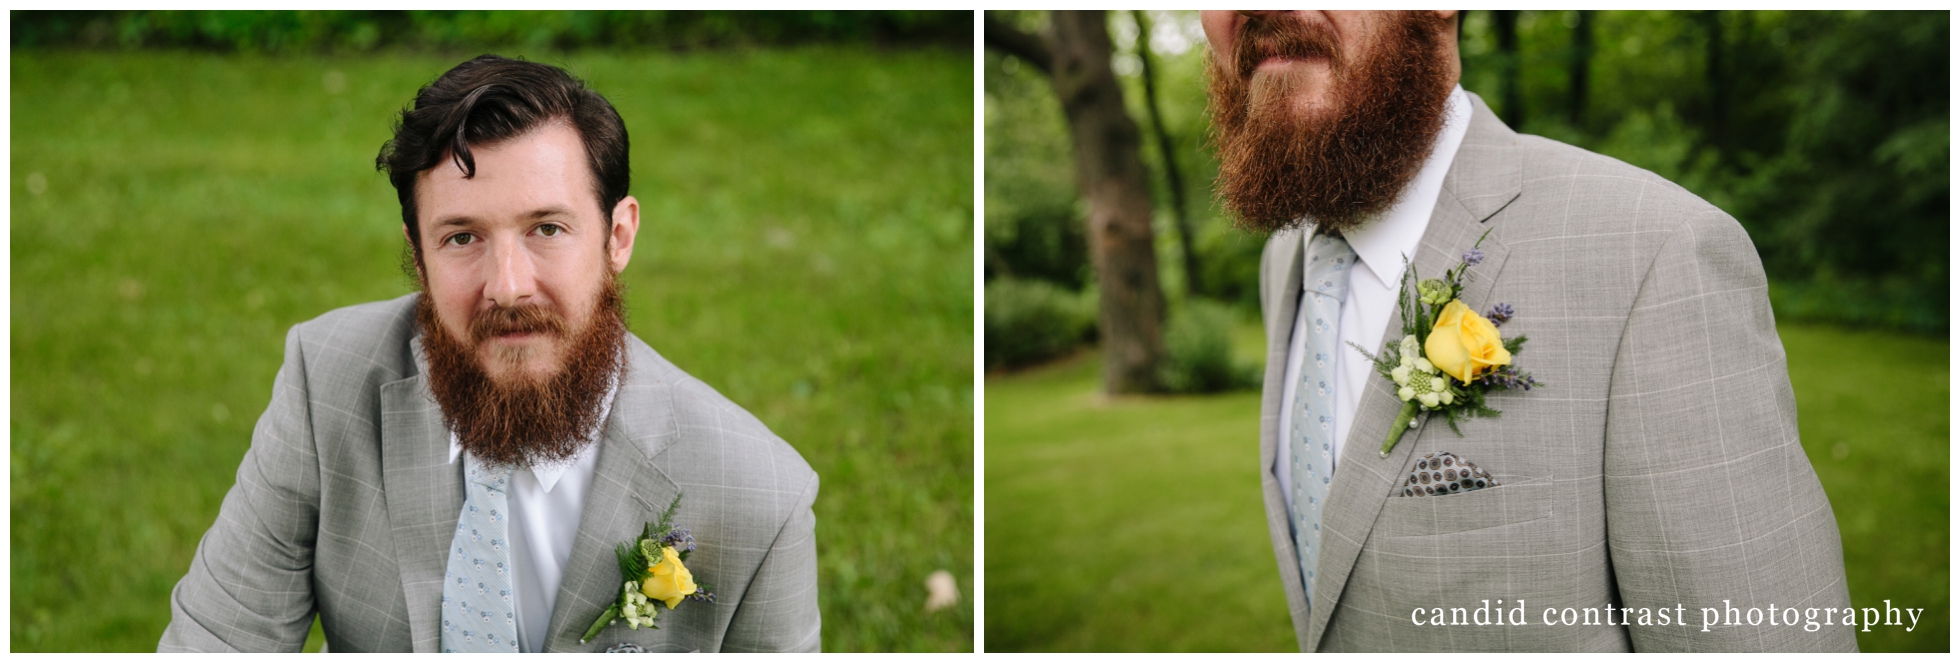 modern groom portraits at backyard wedding in dubuque, ia, candid contrast photography